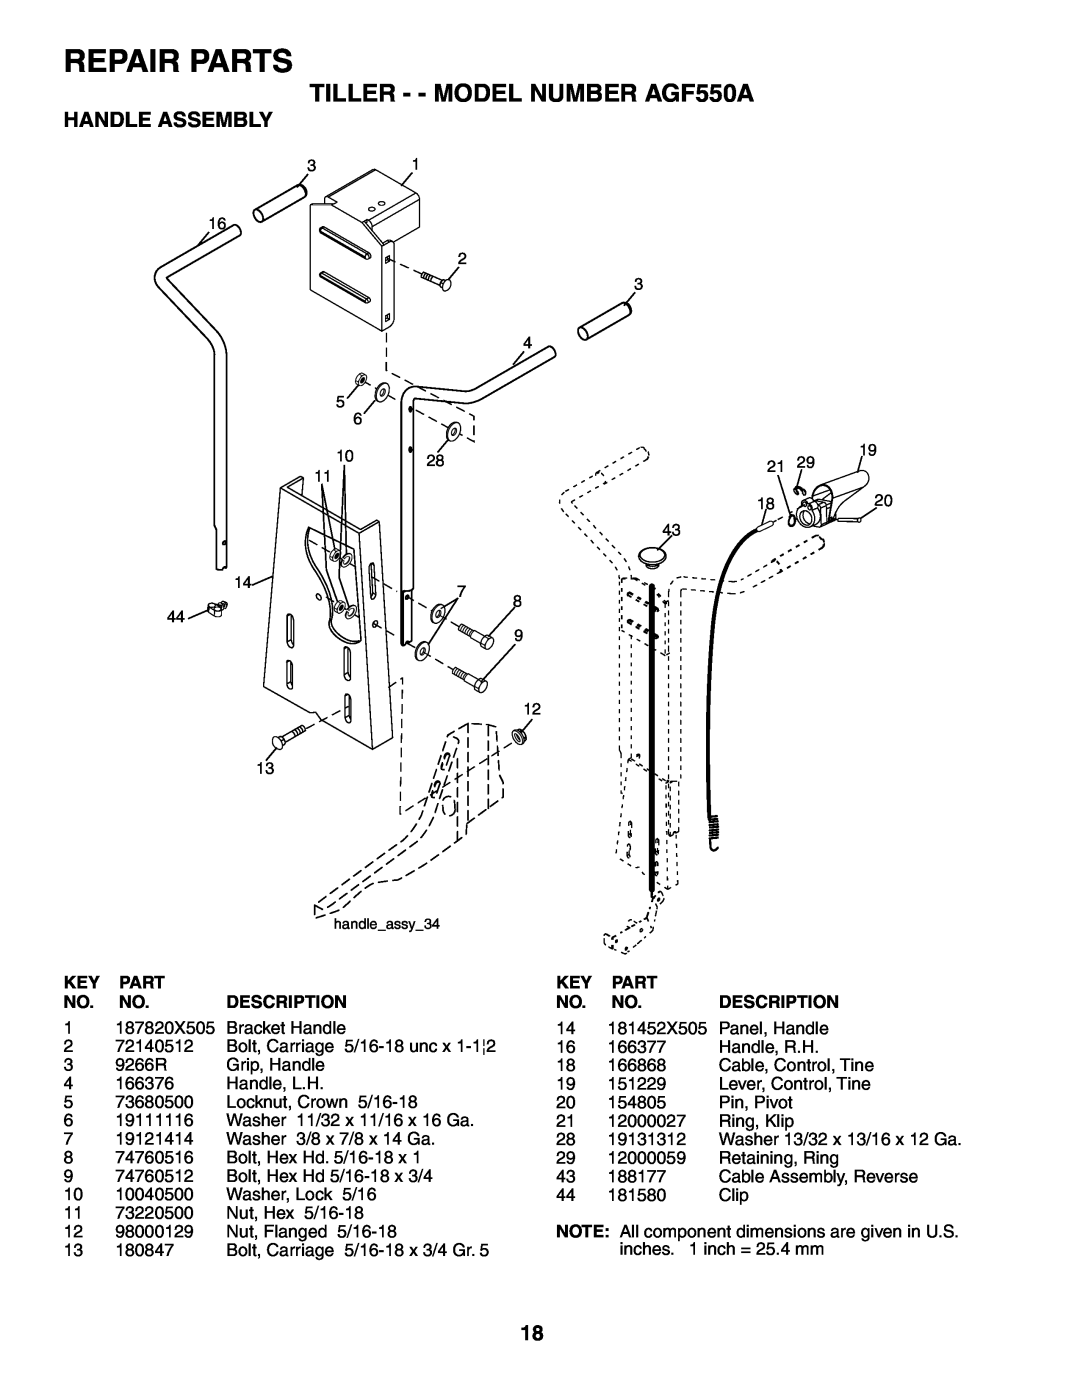 Poulan owner manual Repair Parts, TILLER - - MODEL NUMBER AGF550A, Handle Assembly, Description 